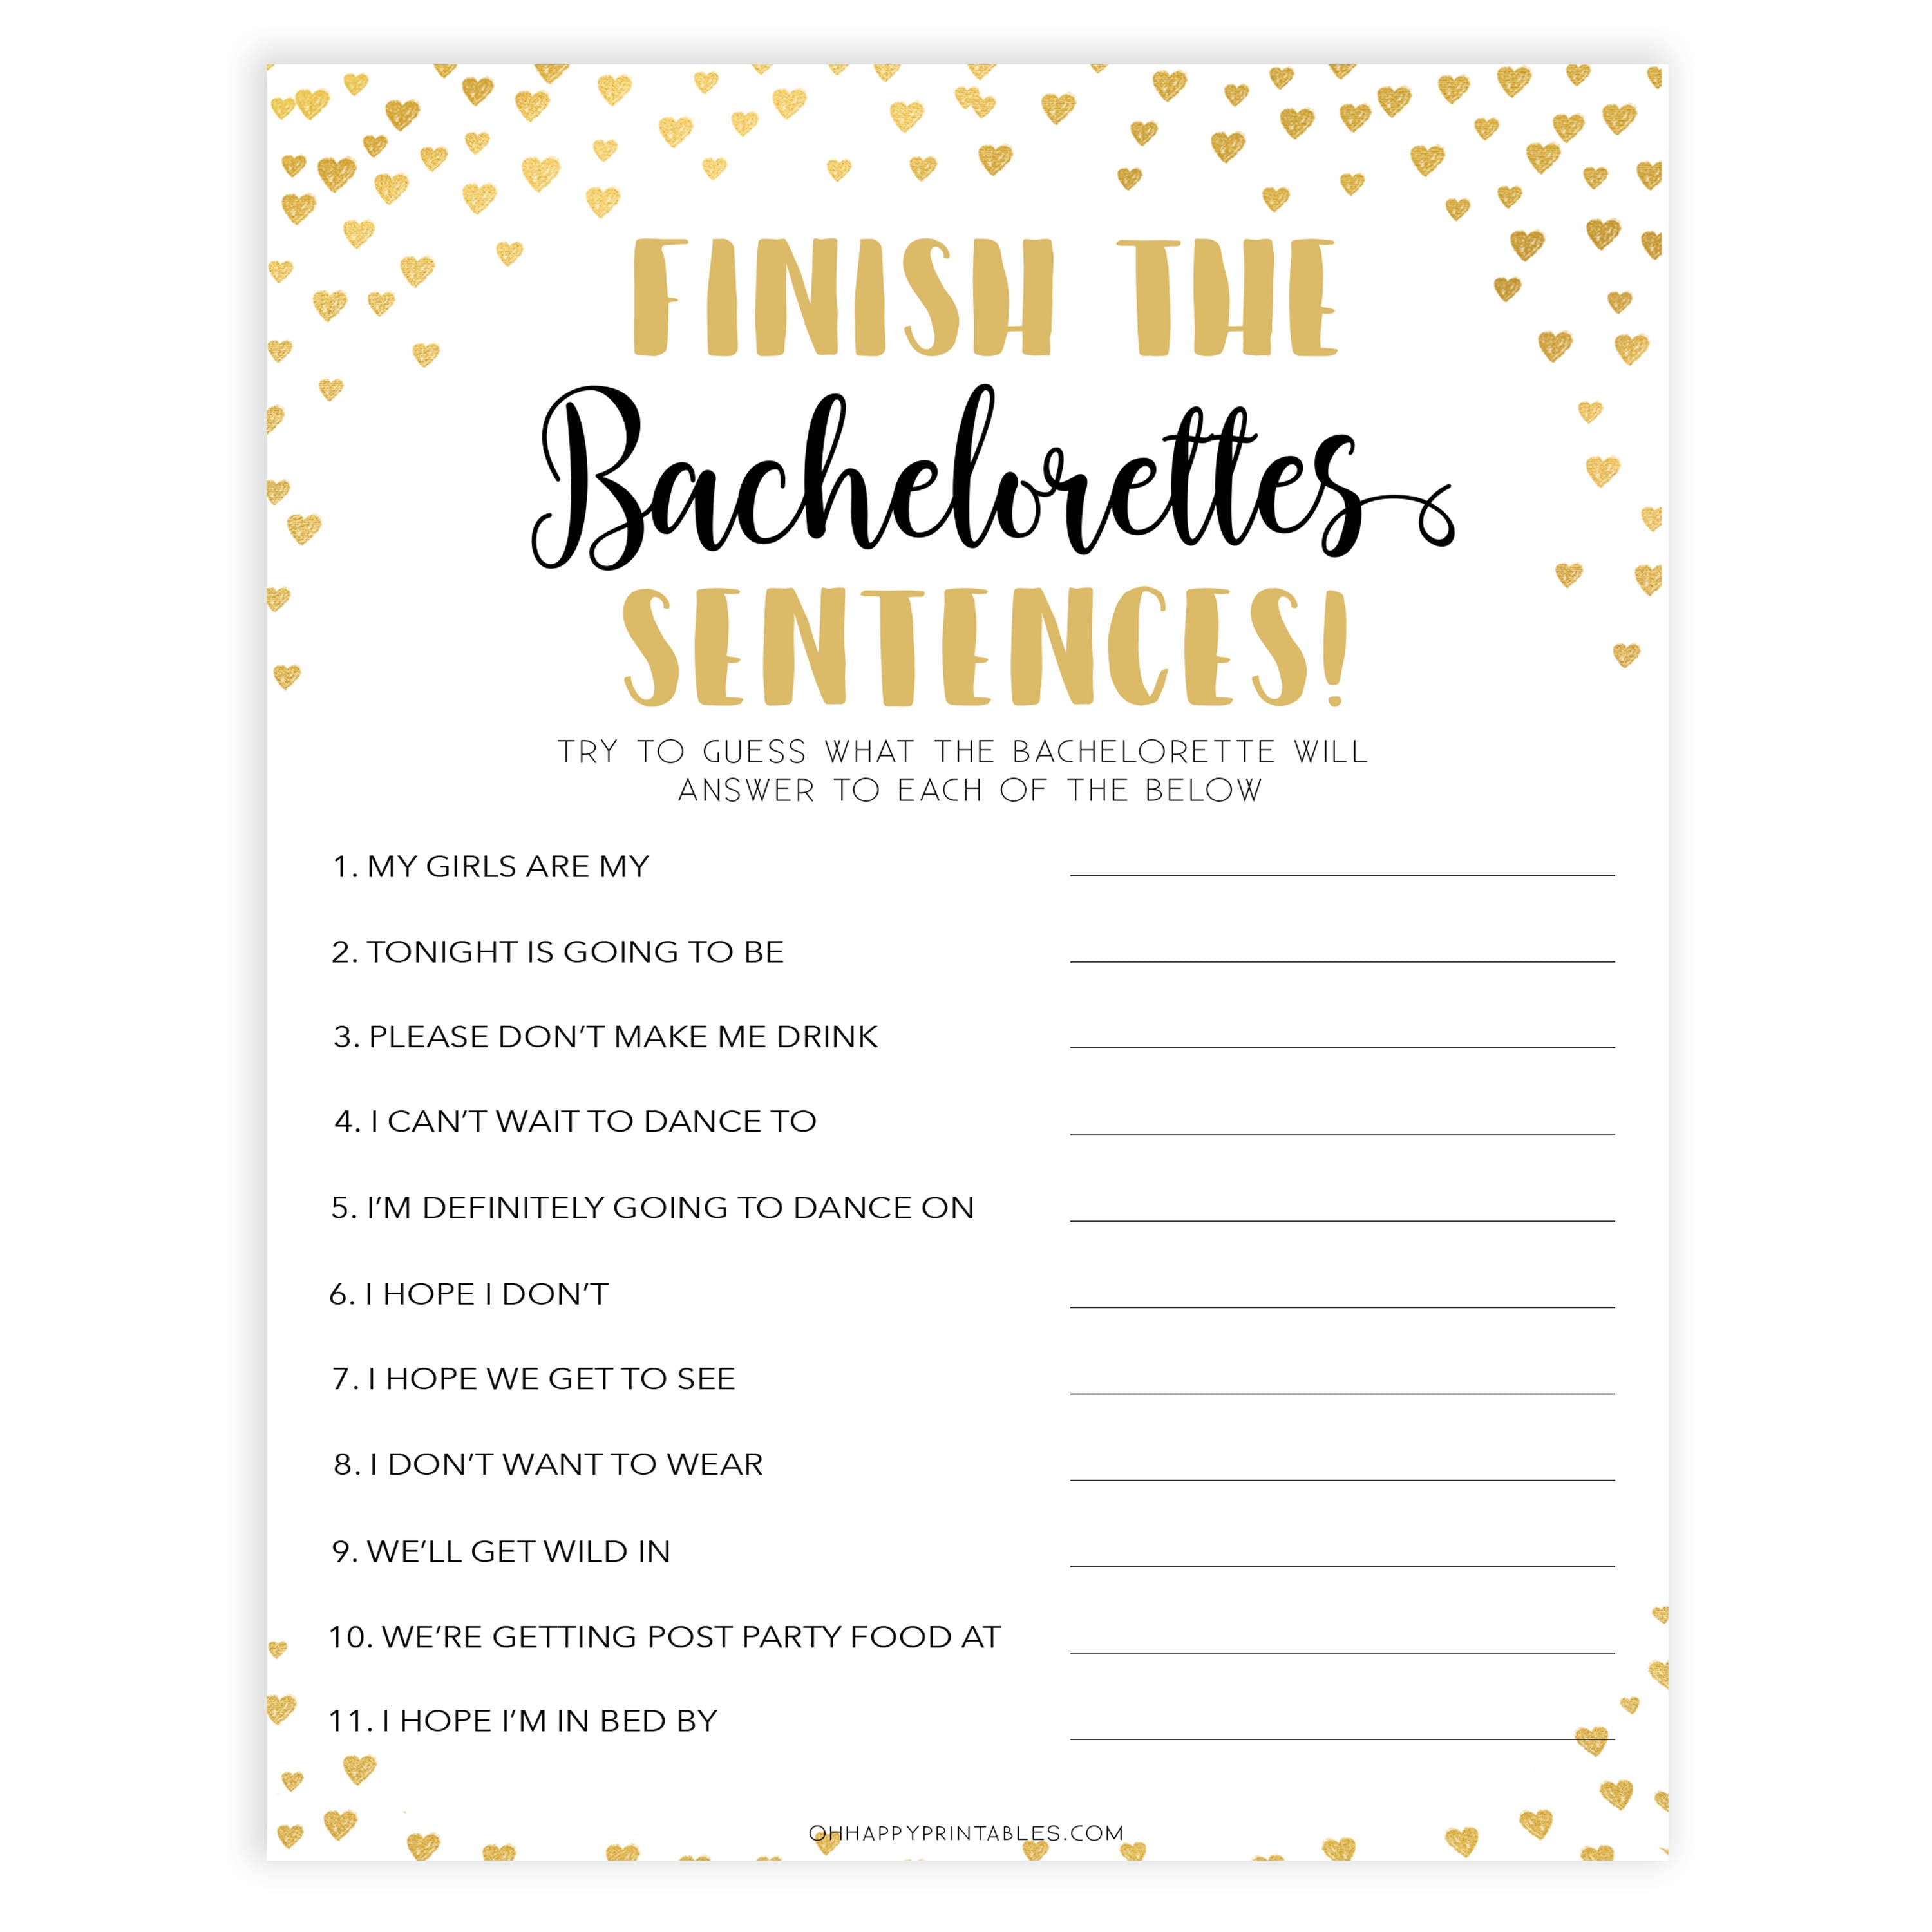 Fun Bachelorette Party Games Oh Happy Printables - Shop on Pinterest